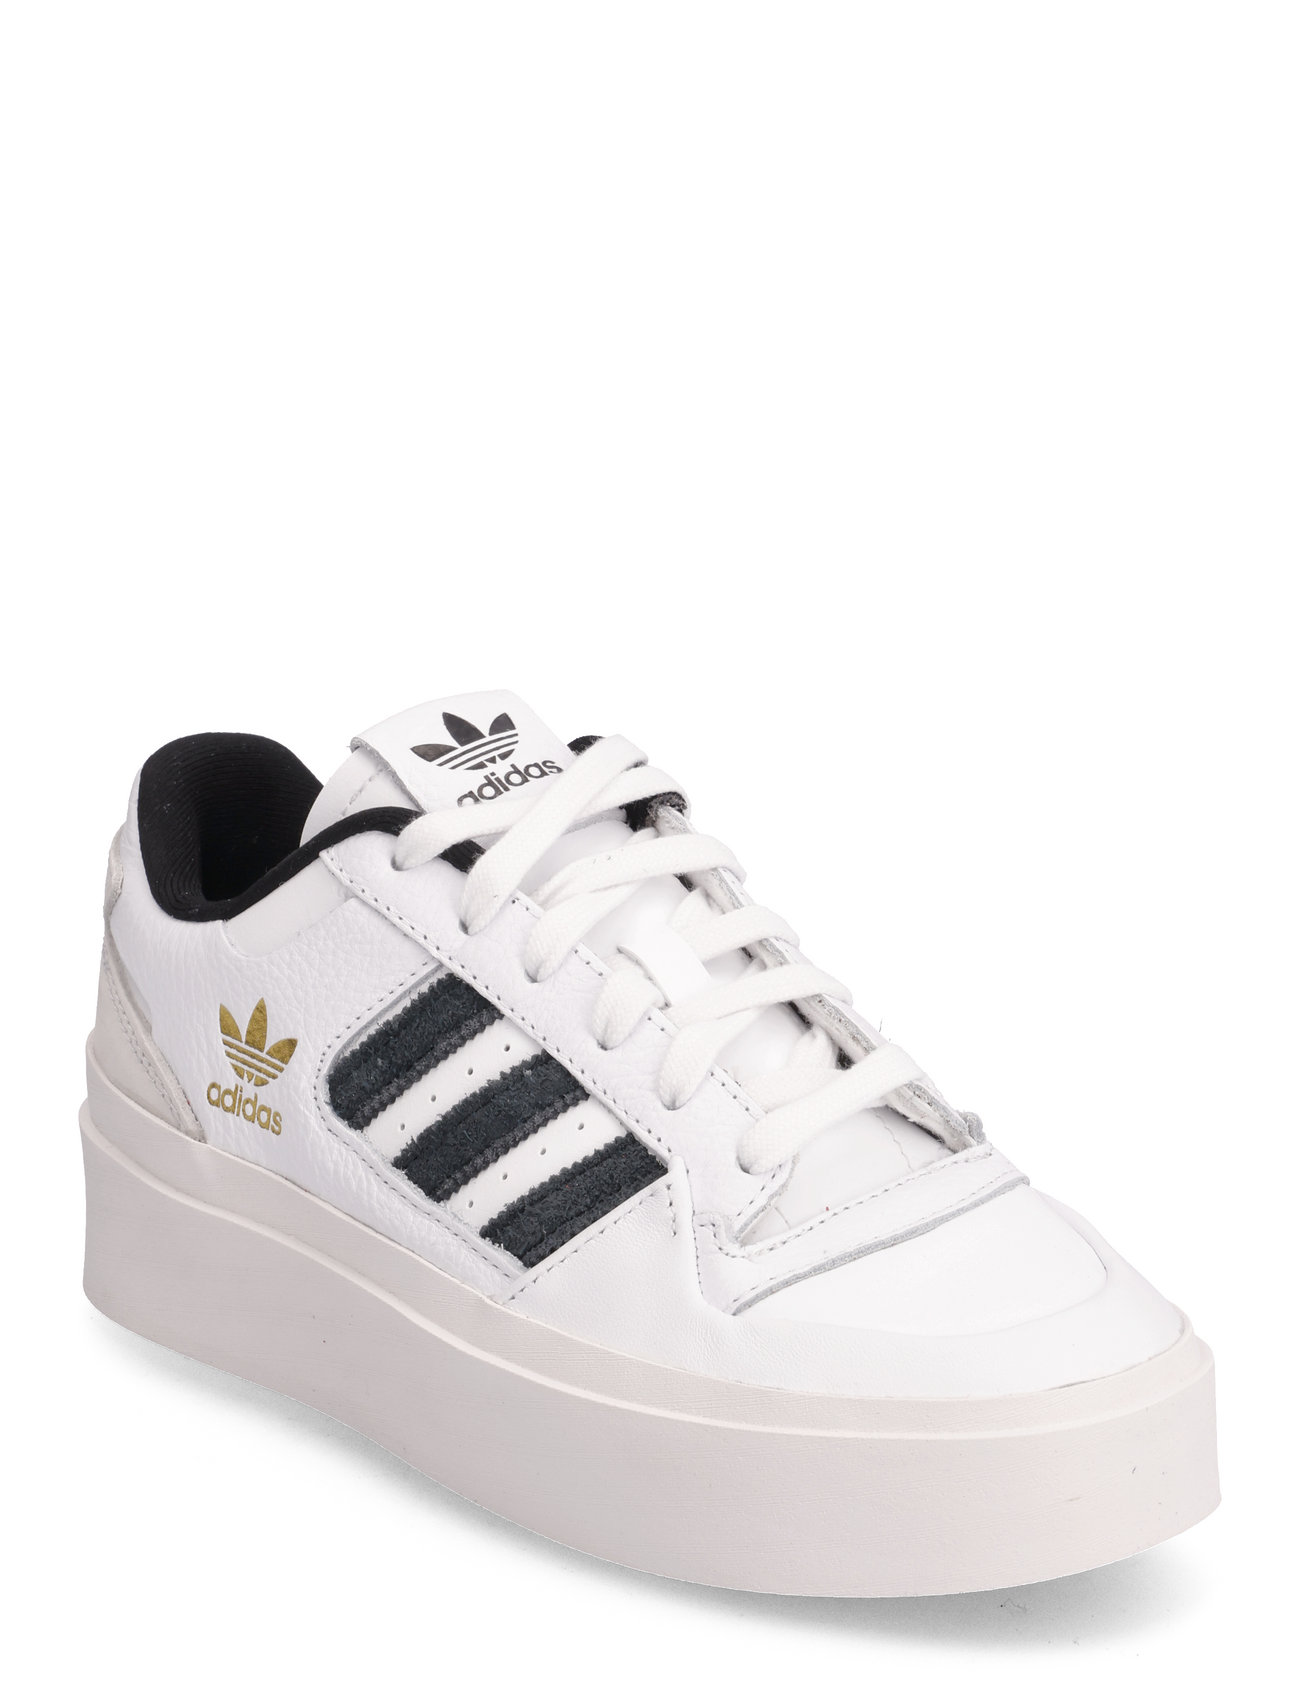 Forum B Ga W Low-top Sneakers White Adidas Originals